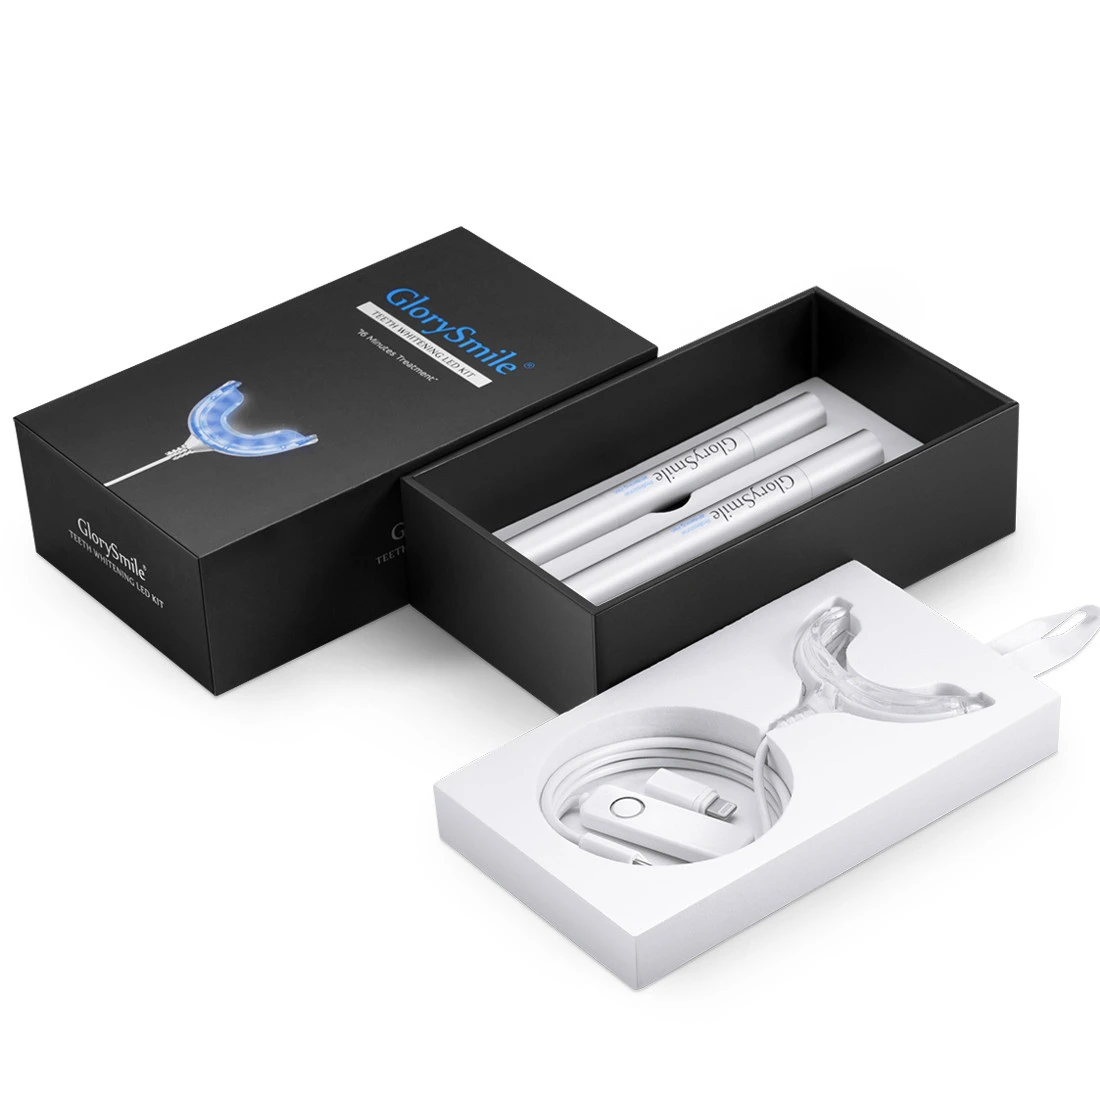 Amazon Hot Popular Blue cold lightning tooth bleaching kit 16 min 3 in 1 Phone Connect Dental Whitening Kit